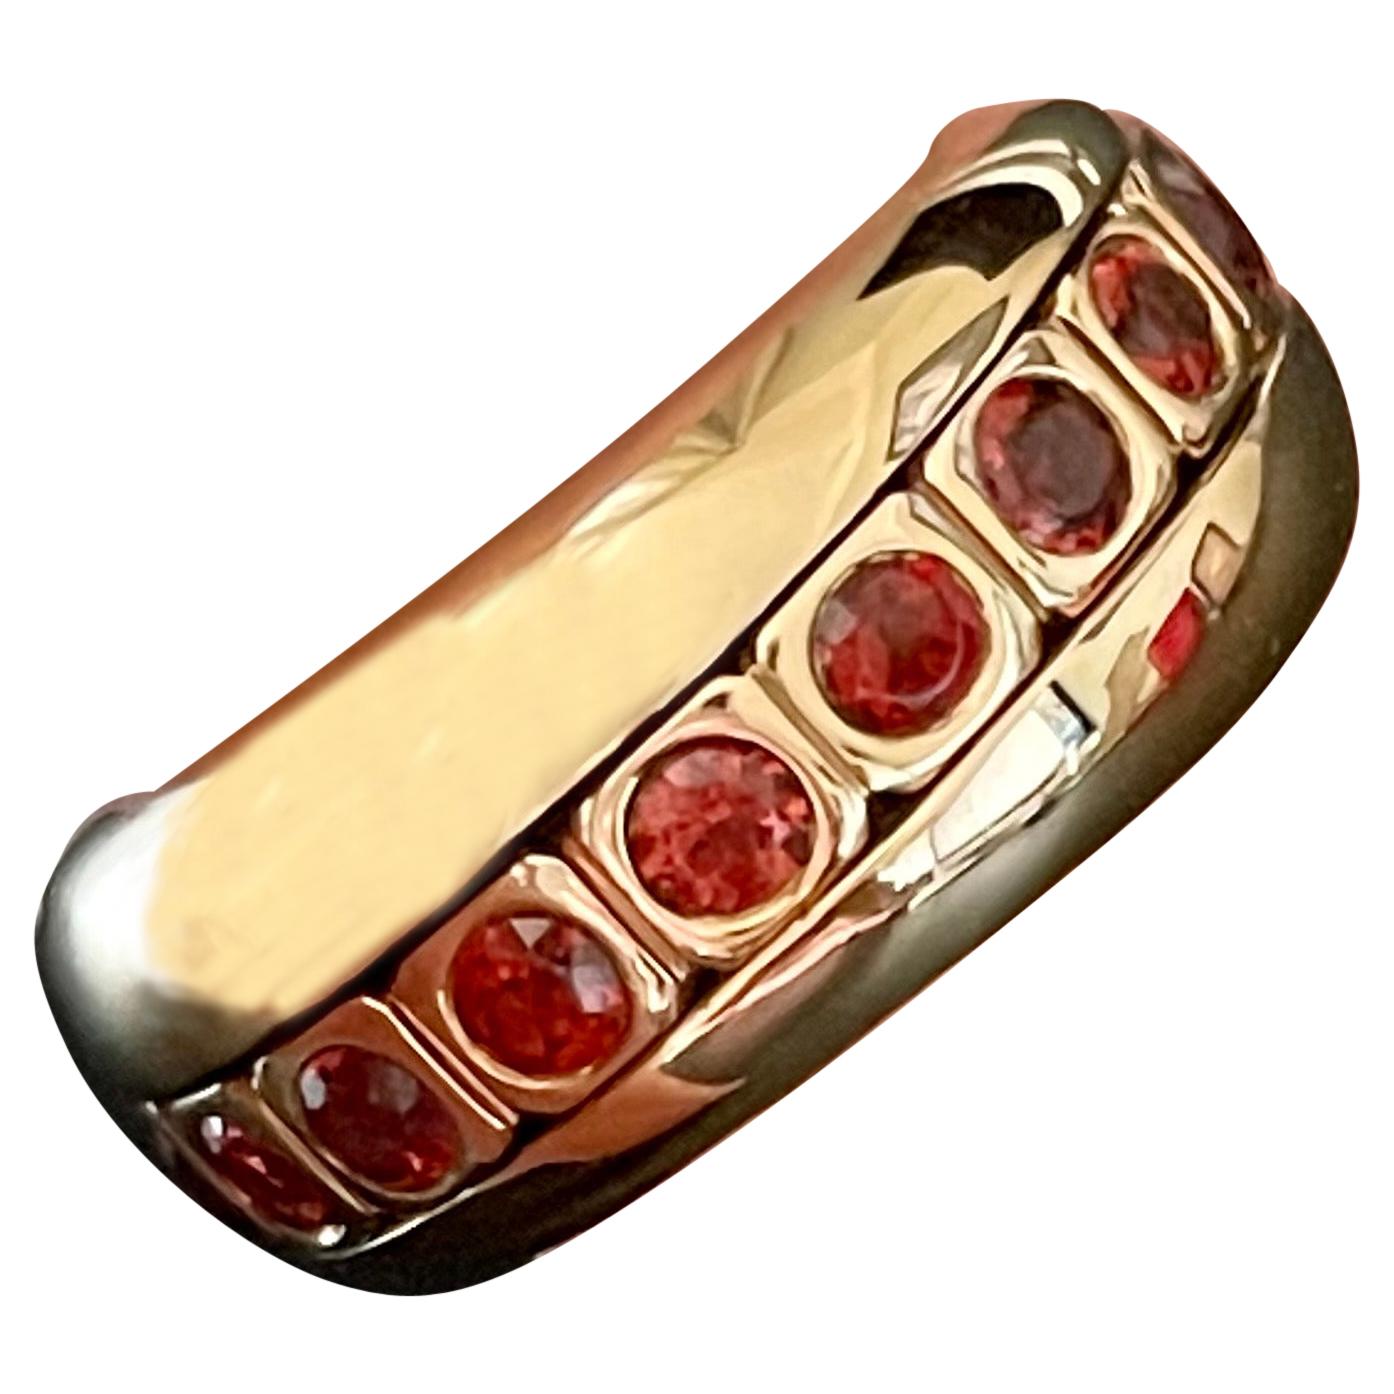 Unique 18 K Rose Gold Band Ring with Mandarin Garnets For Sale